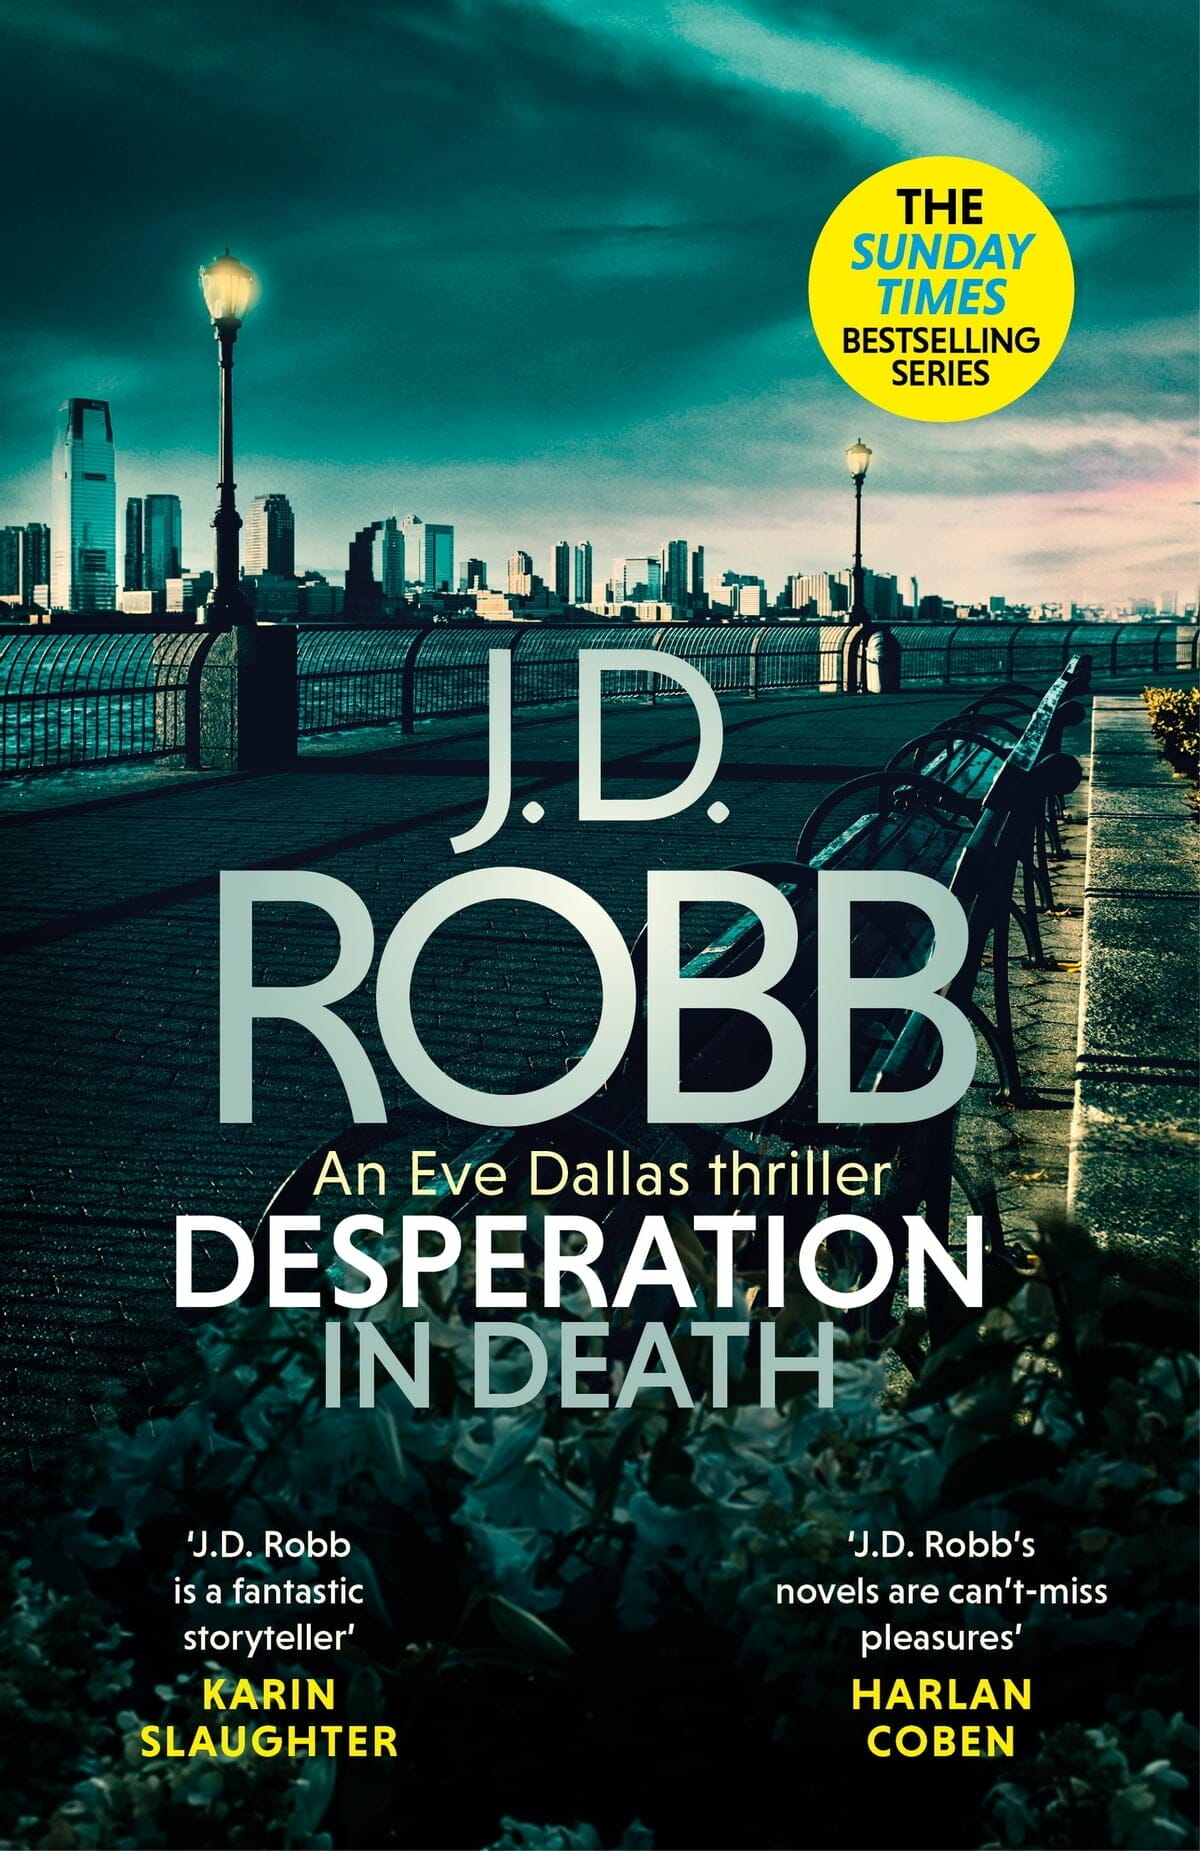 jd robb new book